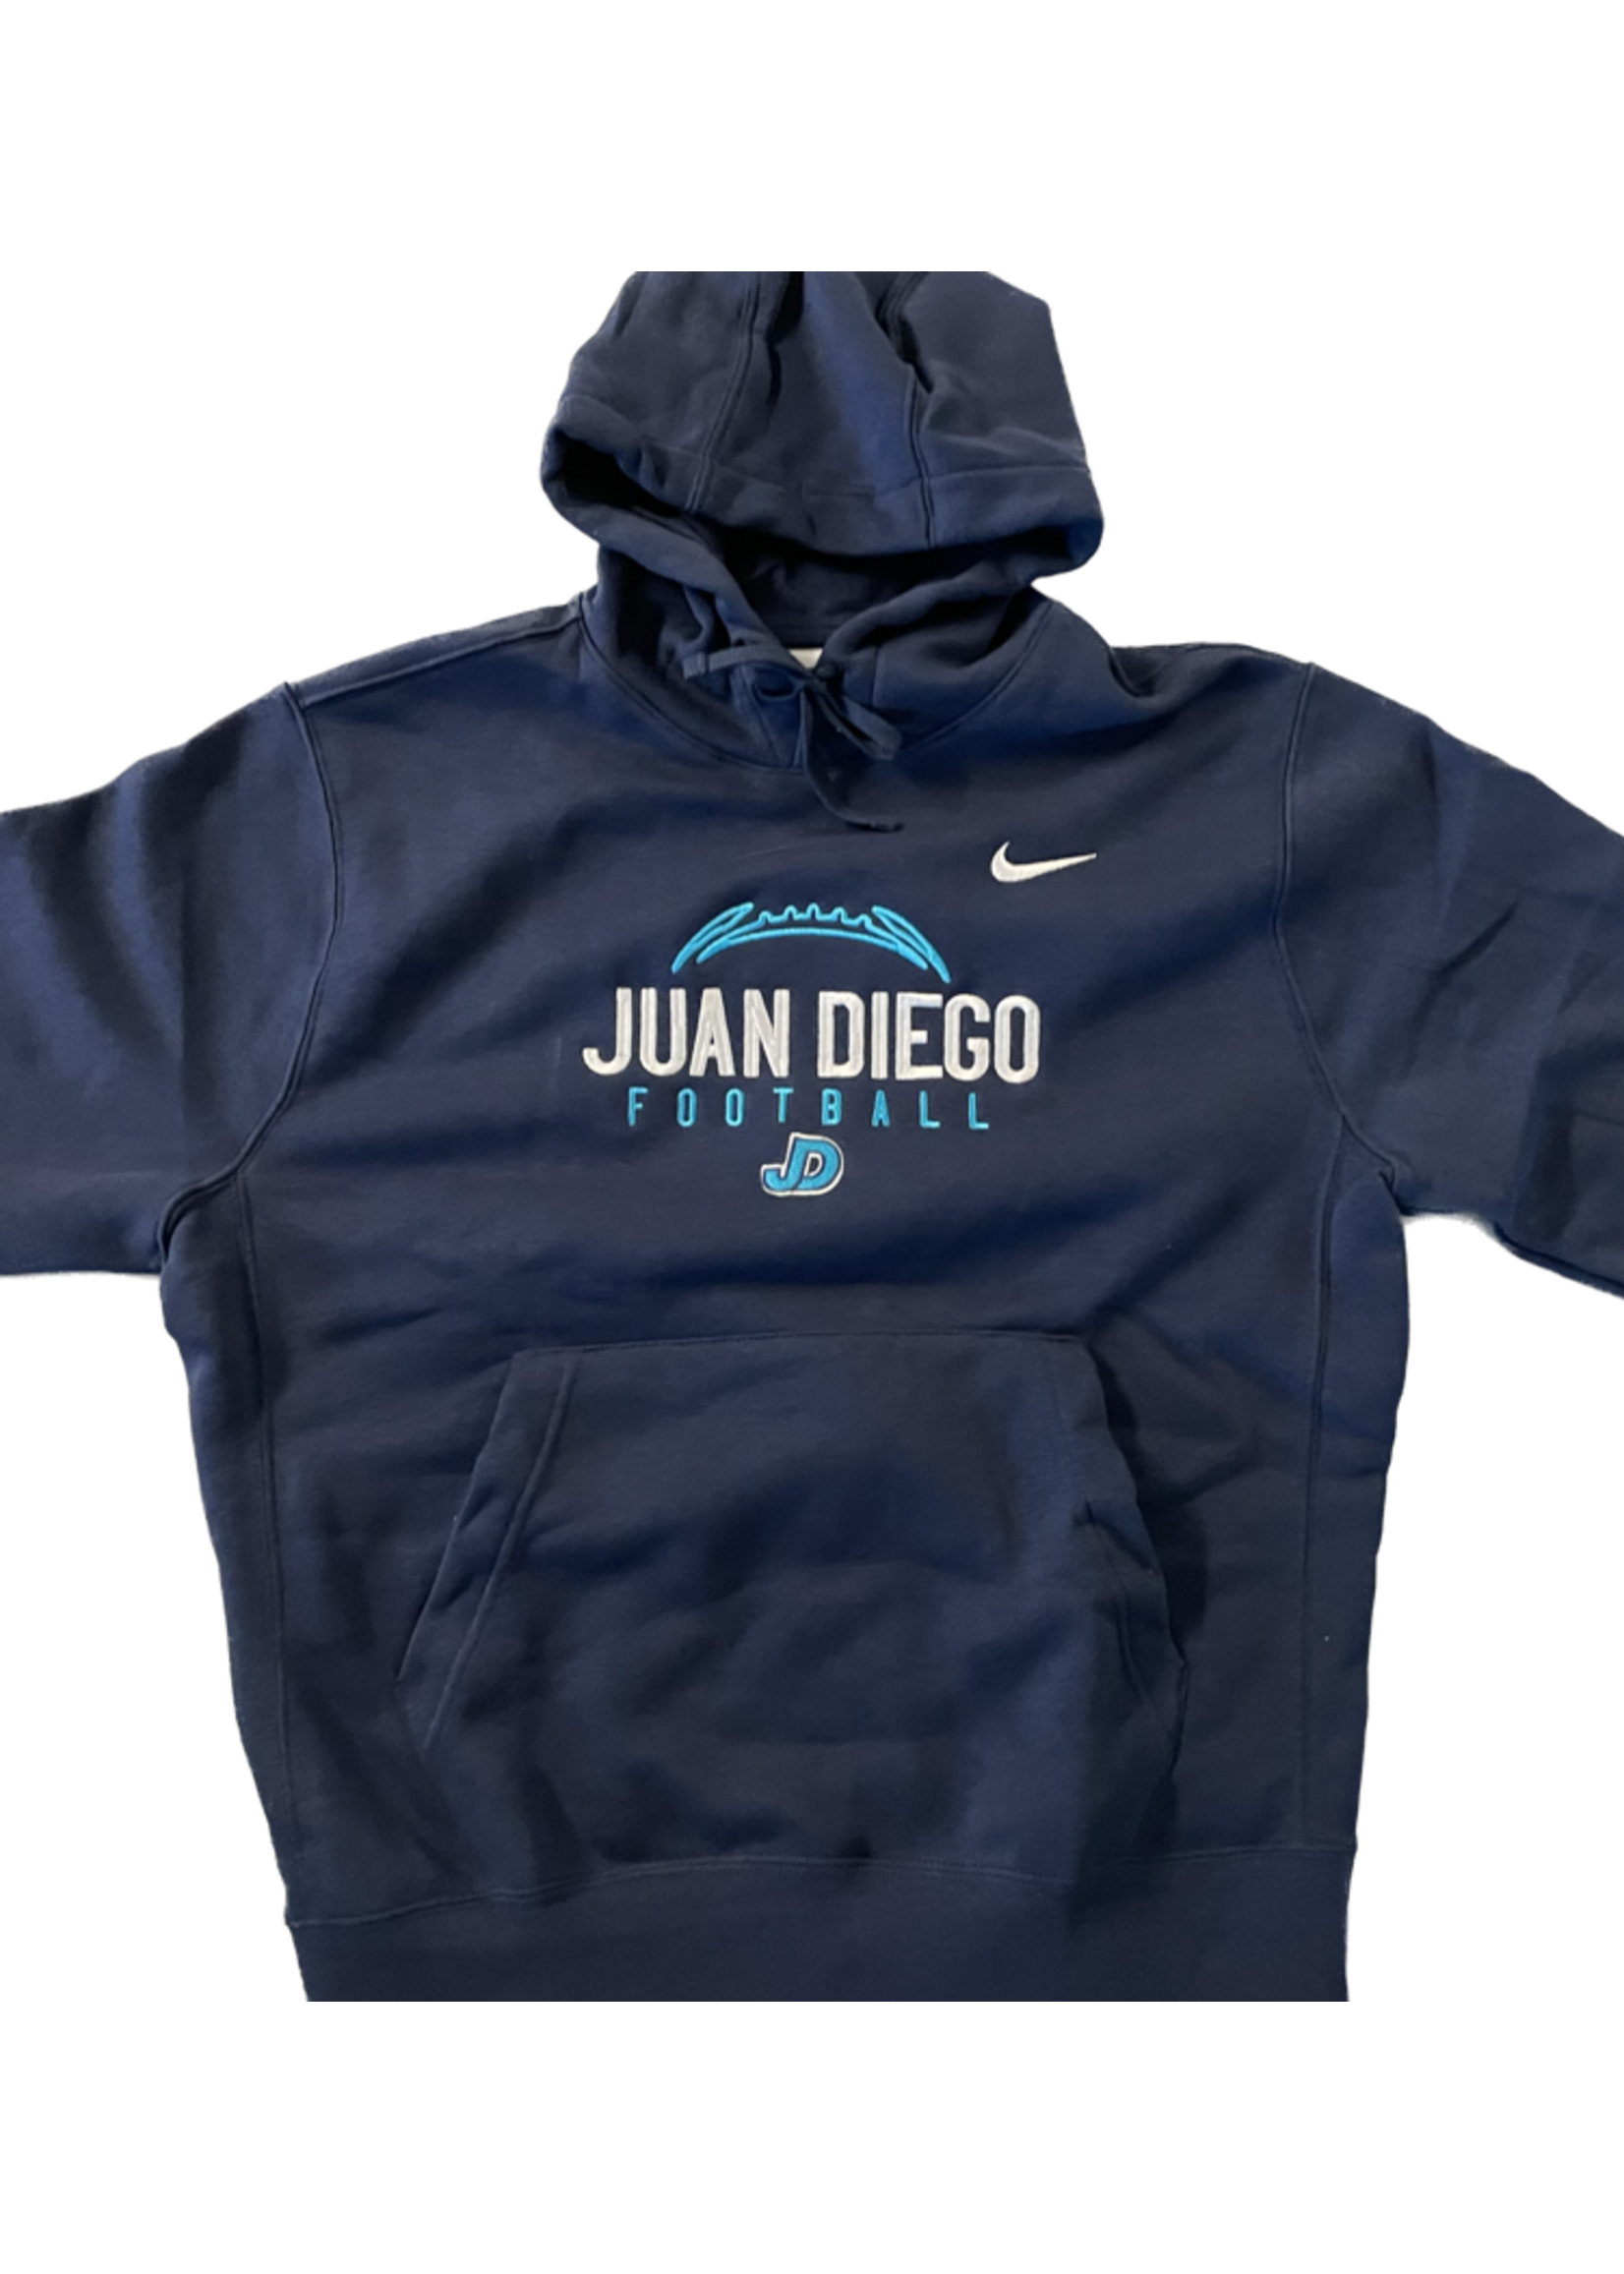 NON-UNIFORM JD Football Embroidered Nike Hooded Sweatshirt